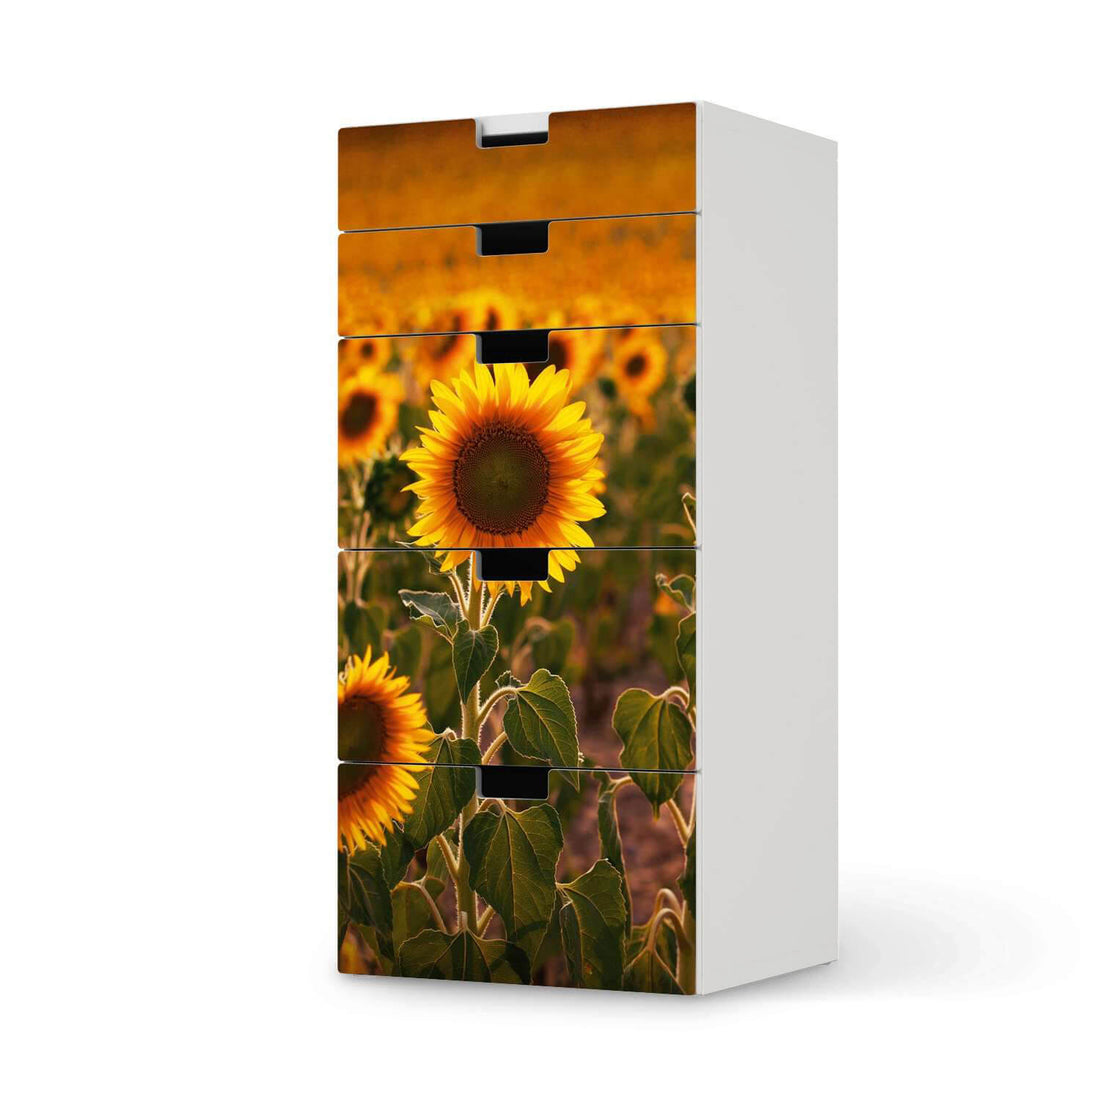 Möbel Klebefolie Sunflowers - IKEA Stuva Kommode - 5 Schubladen  - weiss